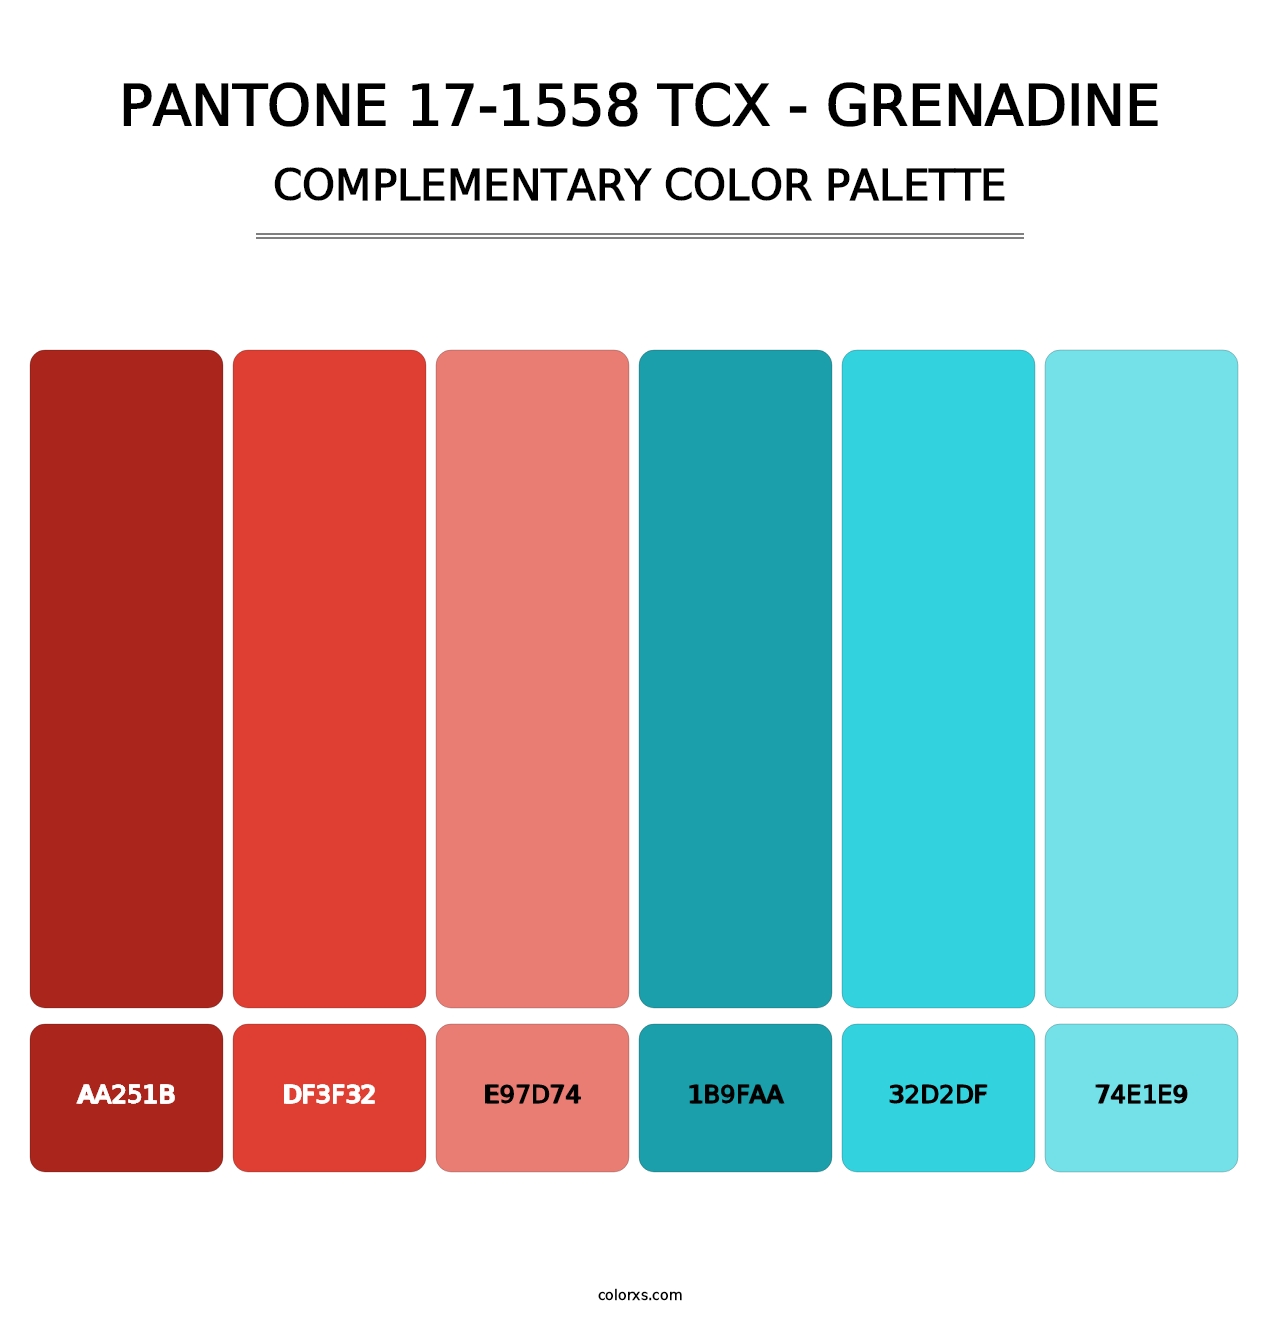 PANTONE 17-1558 TCX - Grenadine - Complementary Color Palette